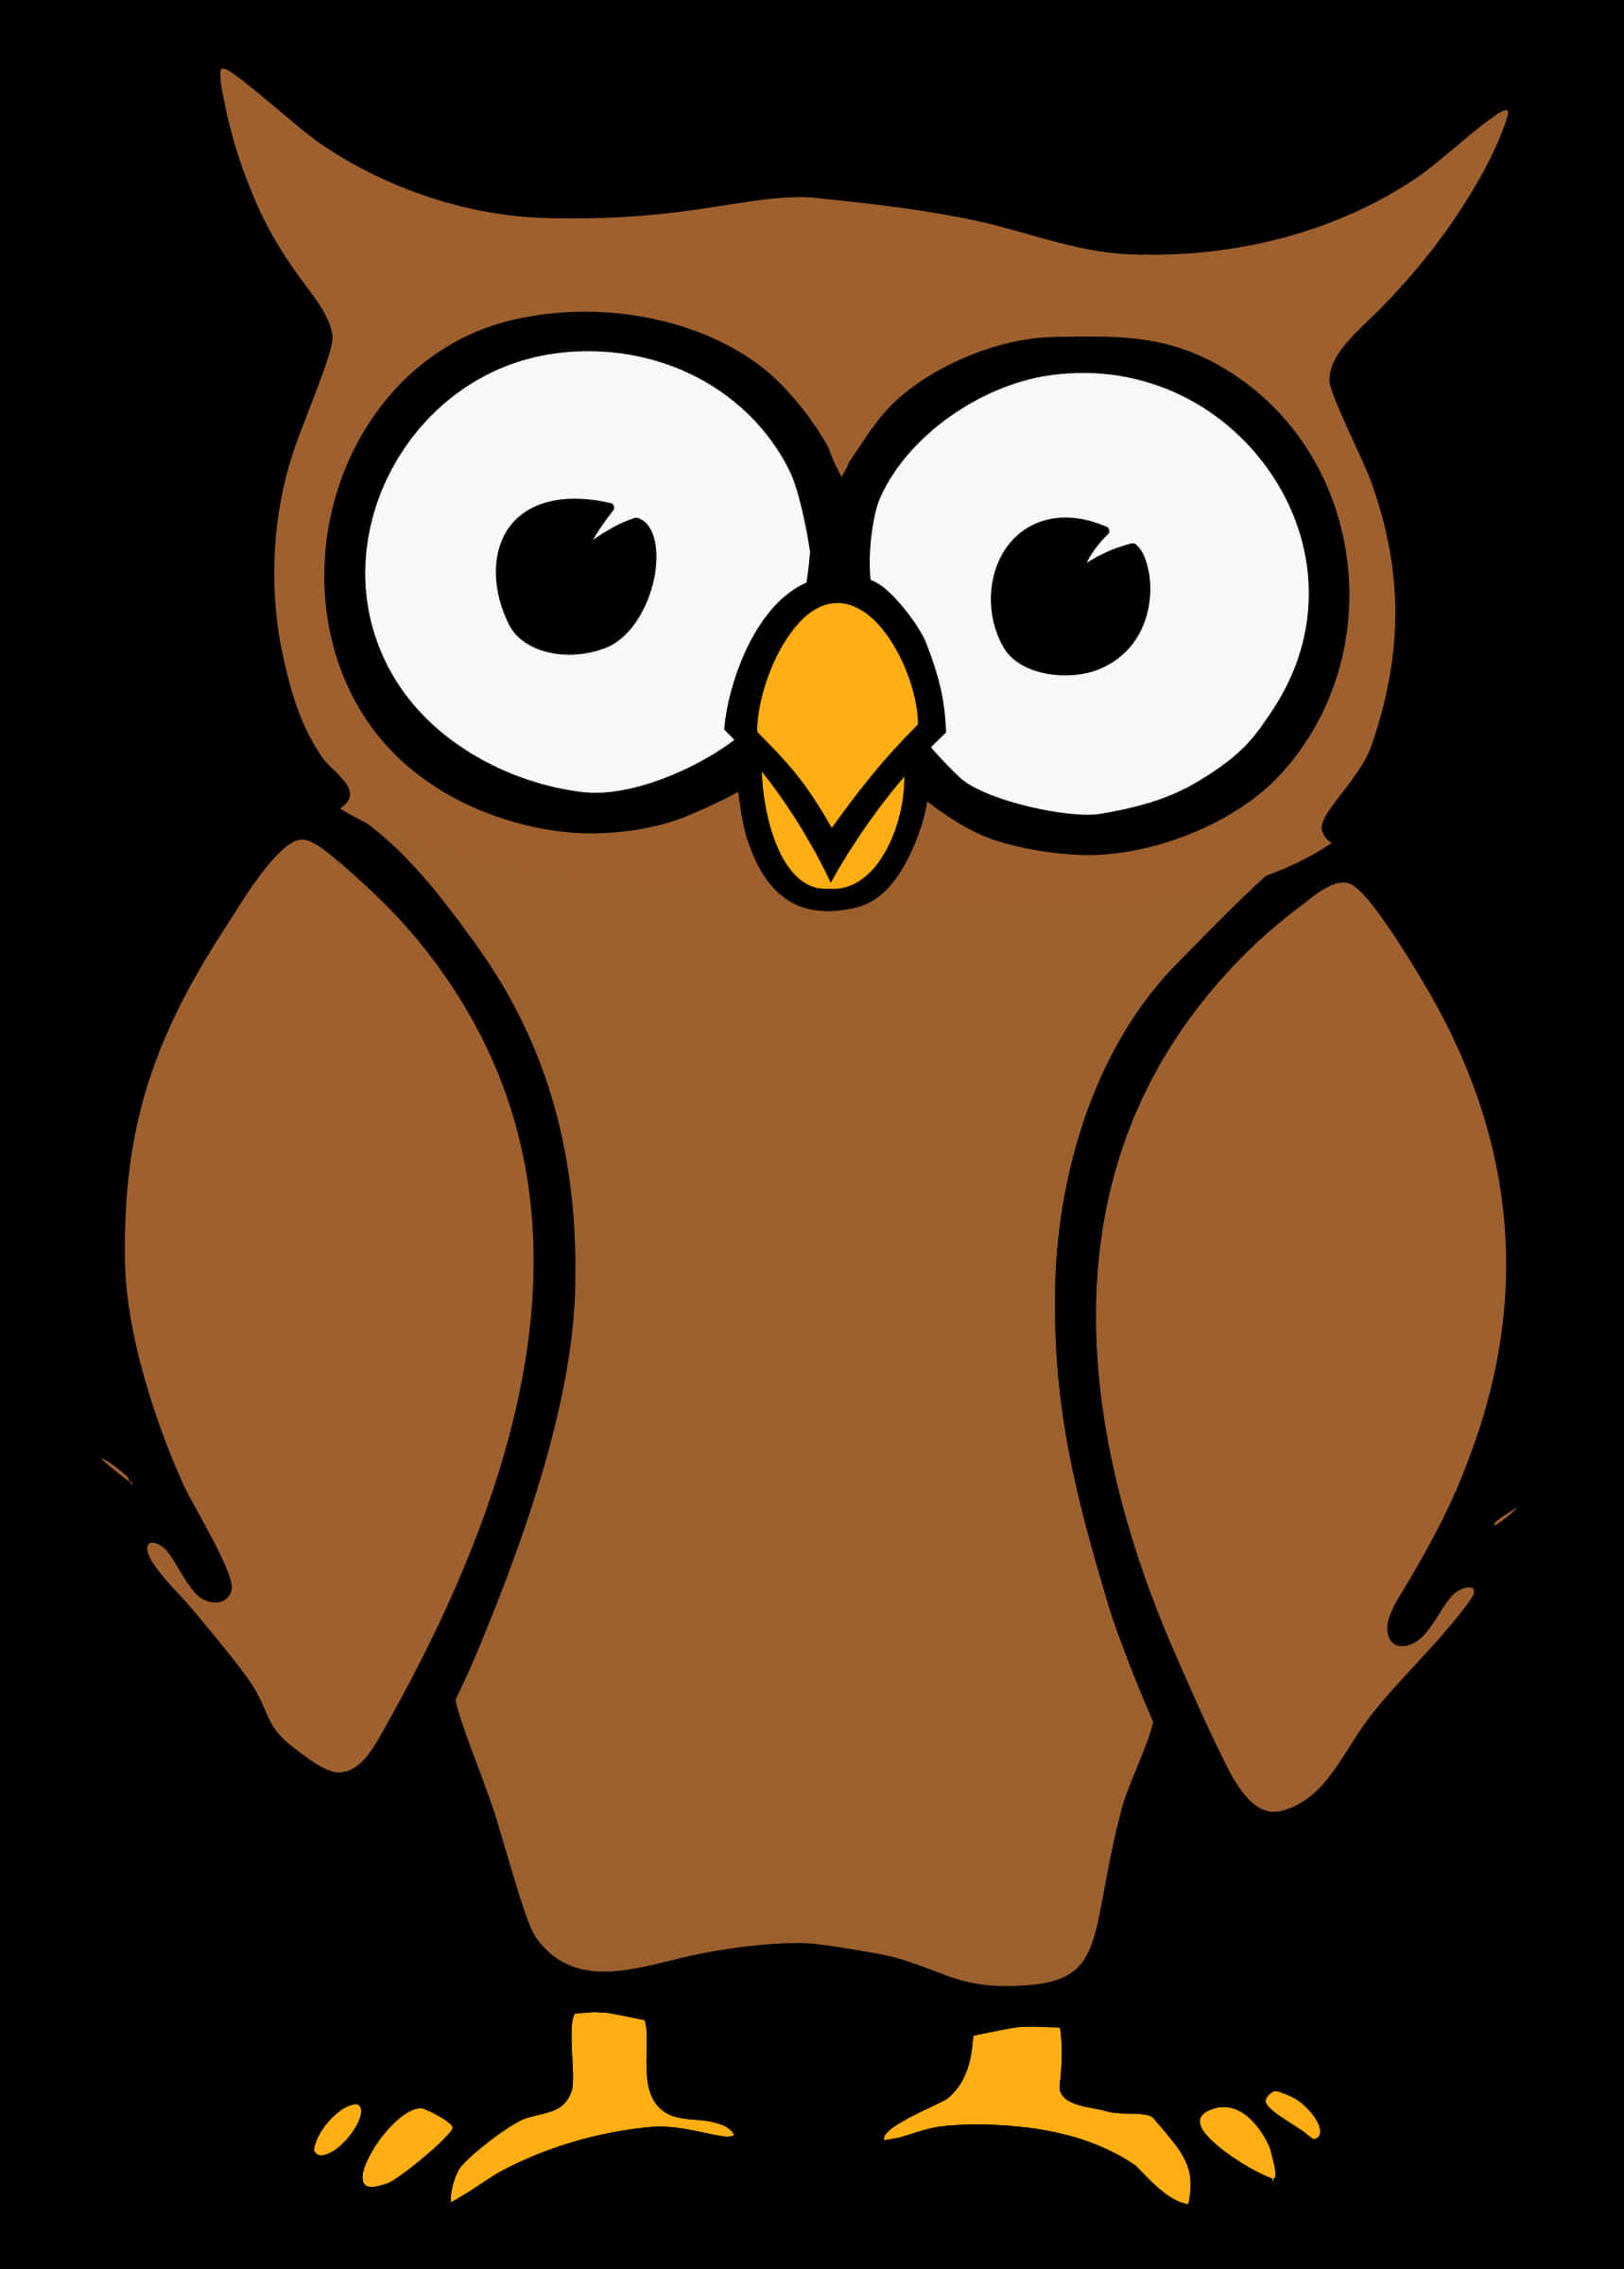 Cartoon Owl Illustration PNG image